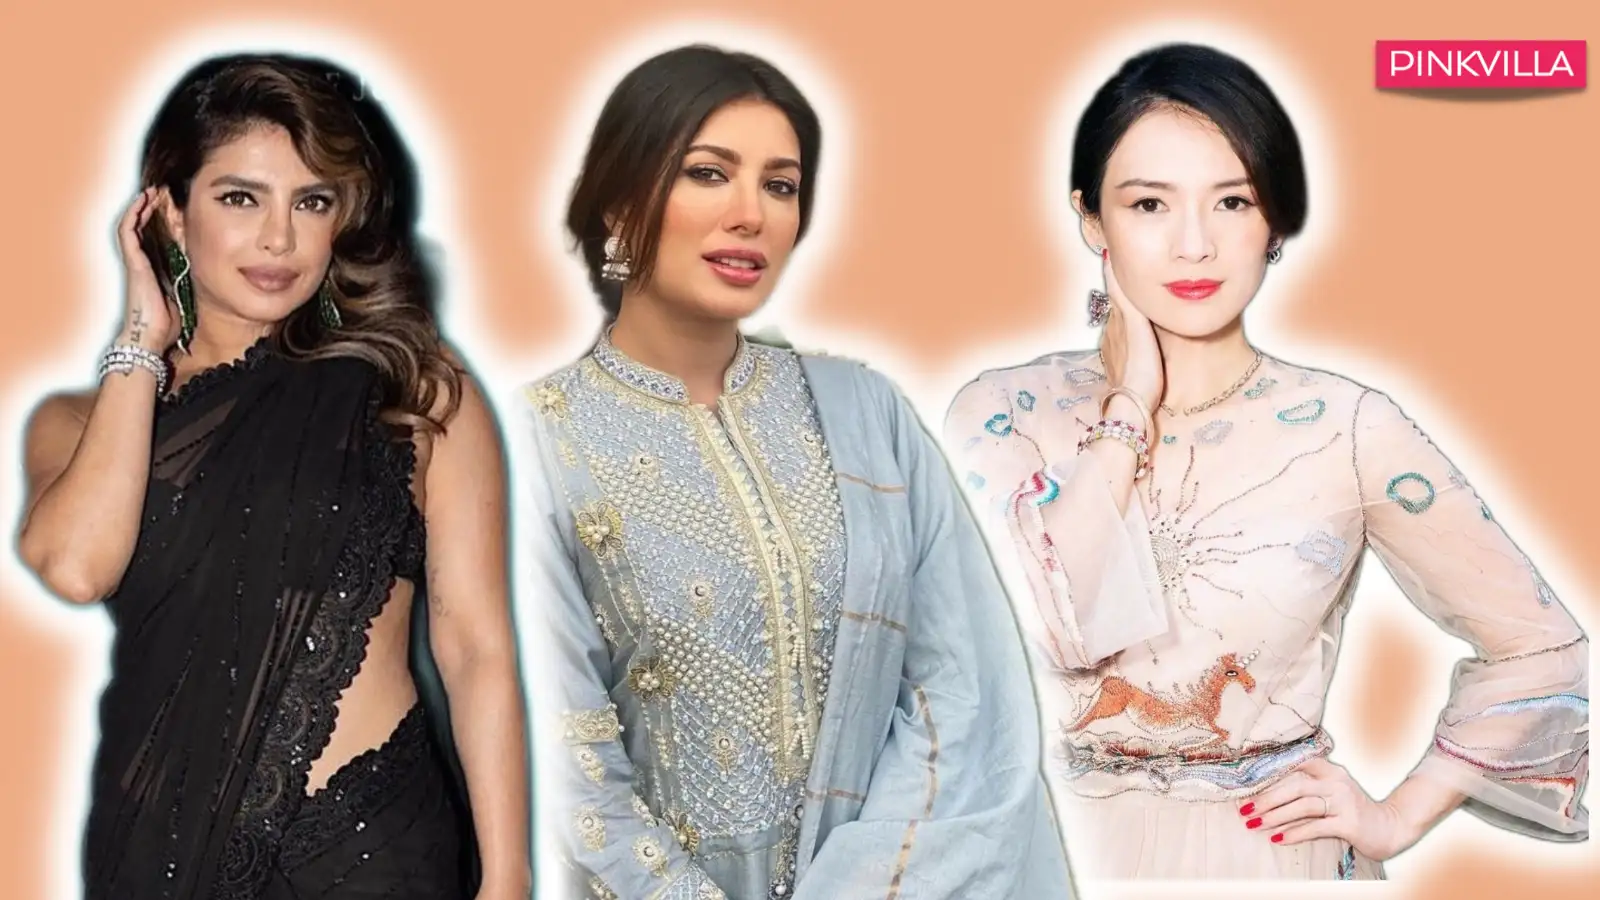 25 Most Beautiful Asian Women with Dazzling Personalities PINKVILLA pic